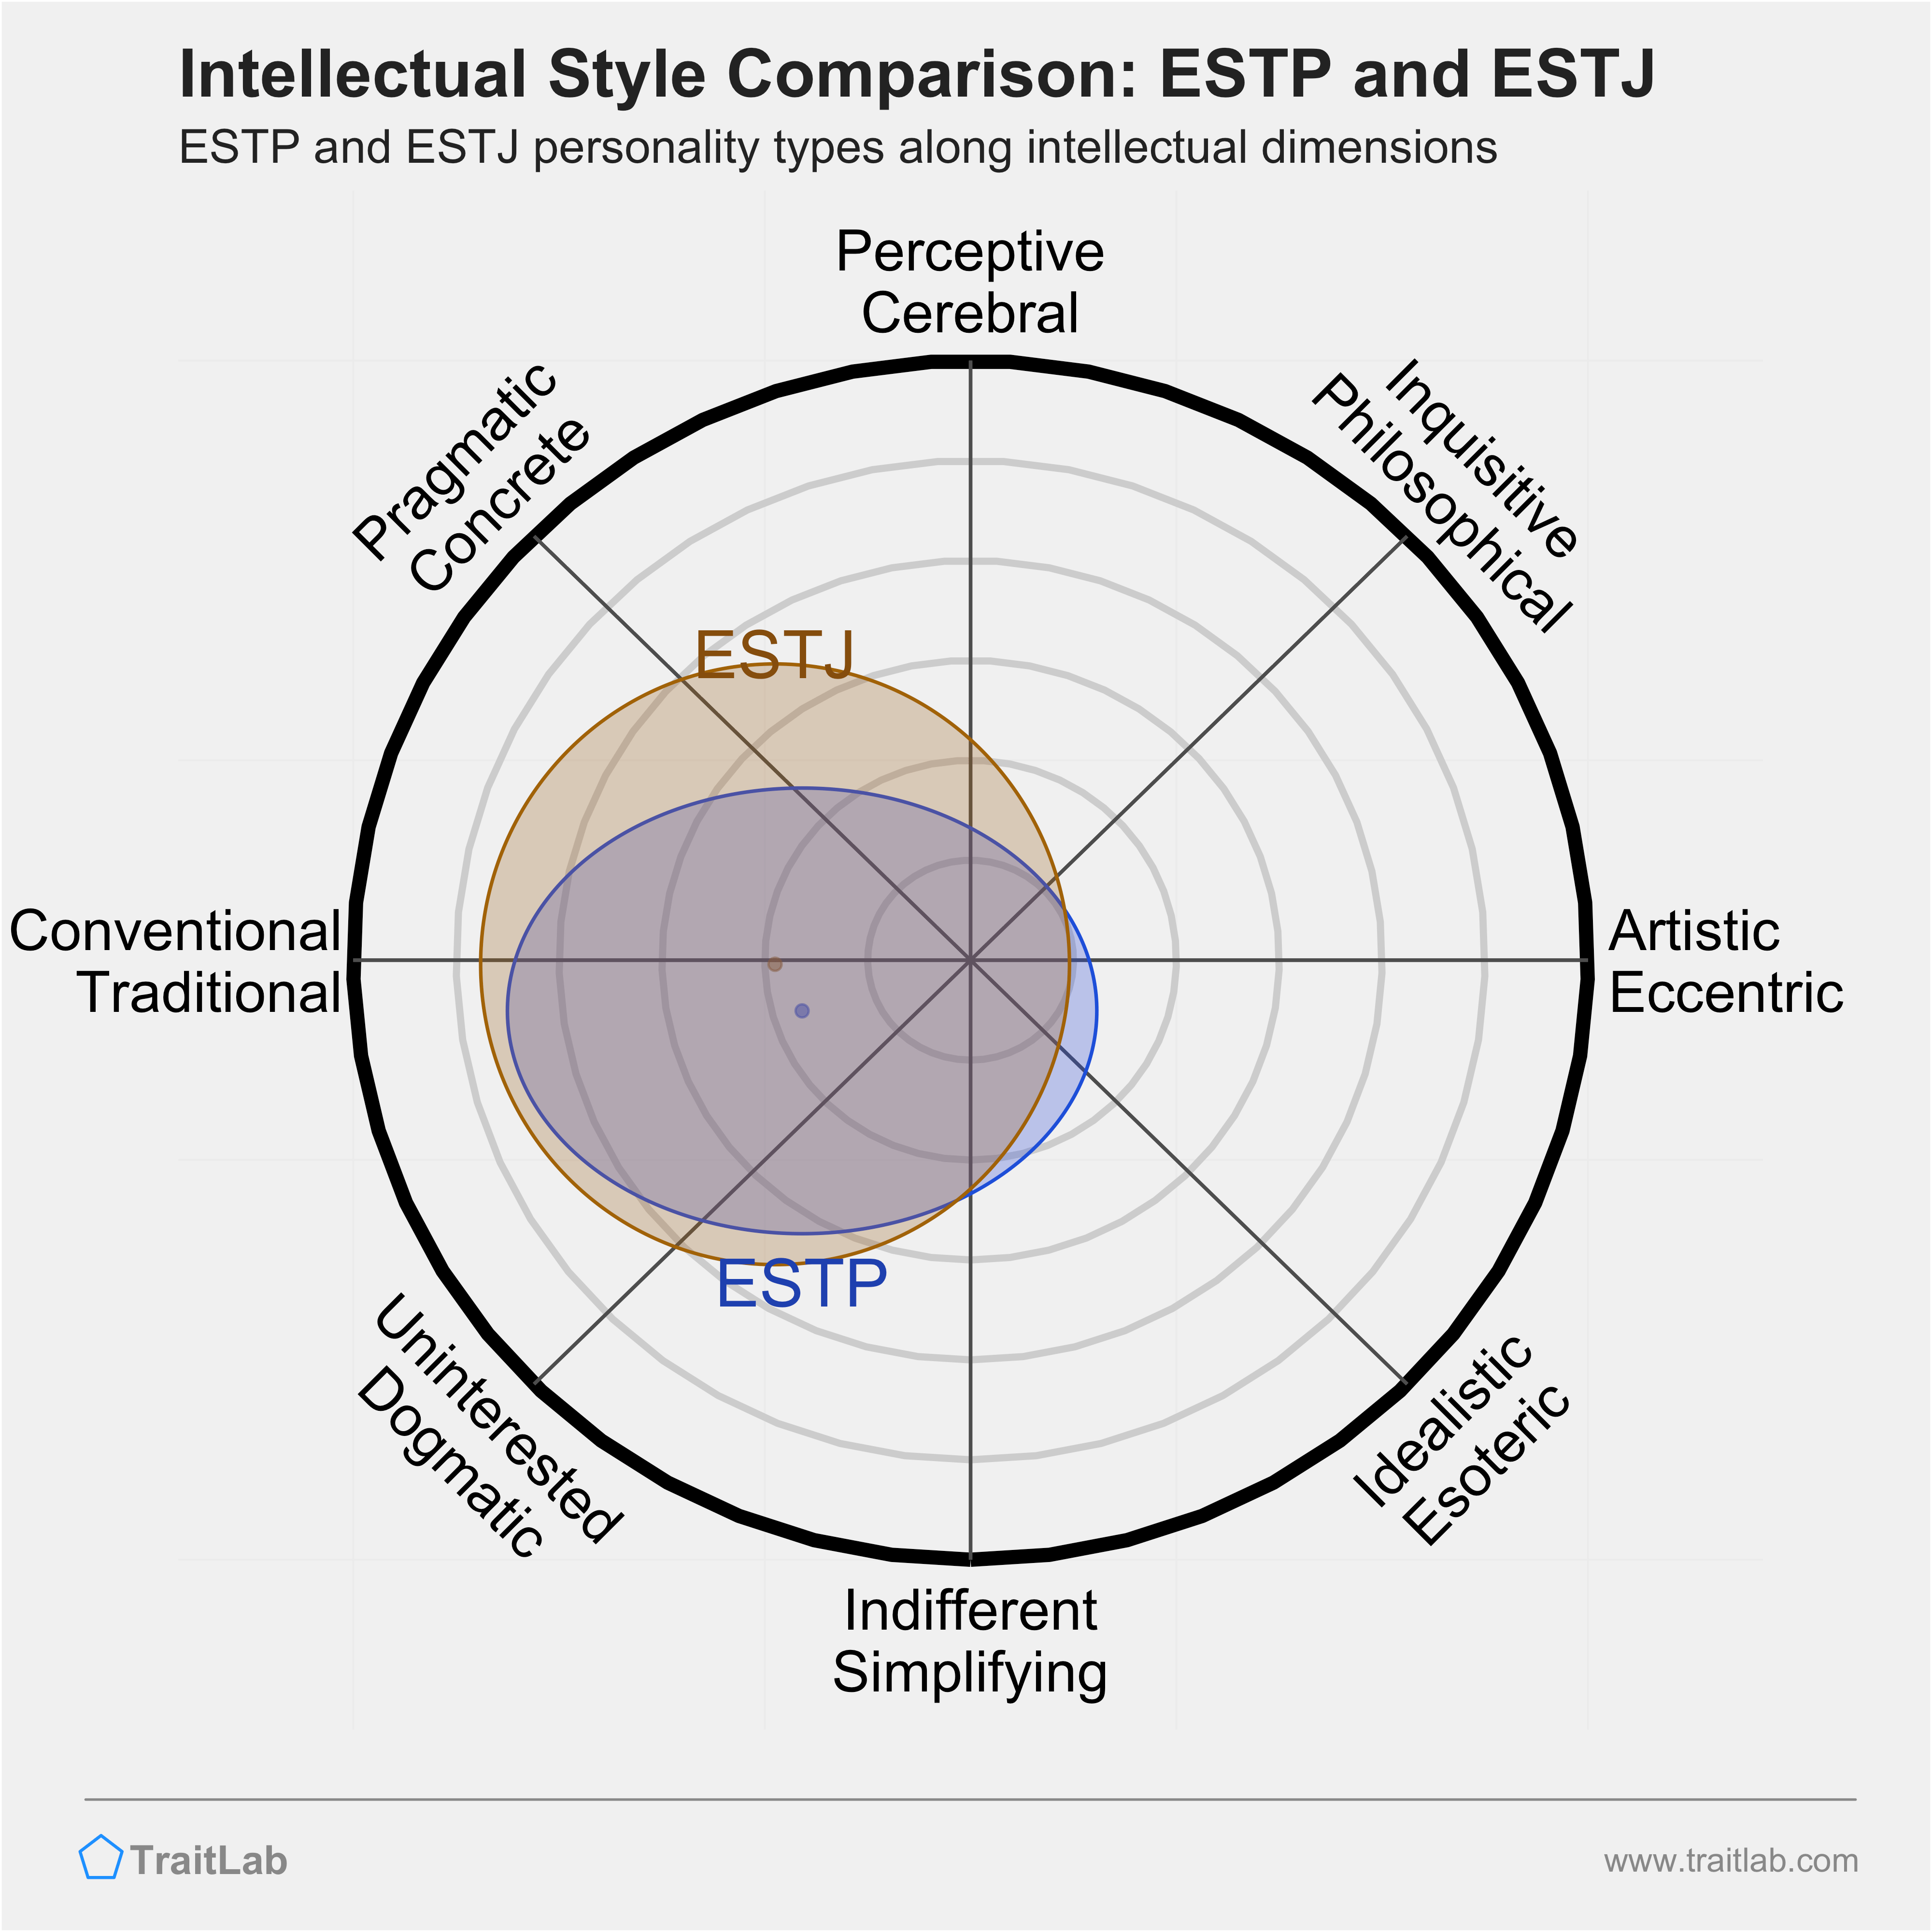 ESTP and ESTJ comparison across intellectual dimensions